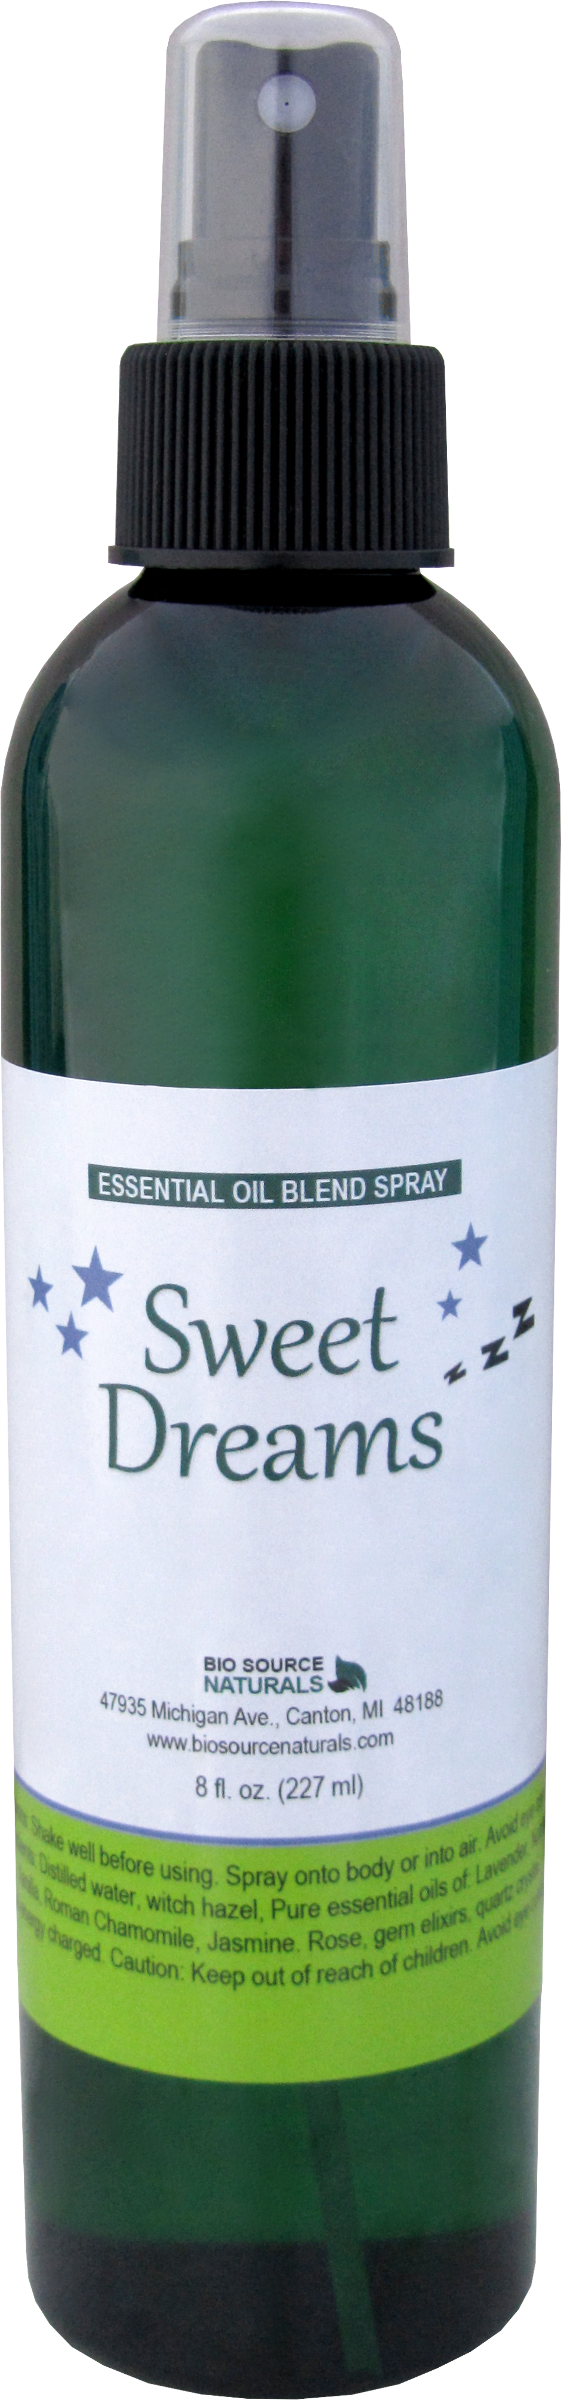 Sweet Dreams Essential Oil Blend Spray